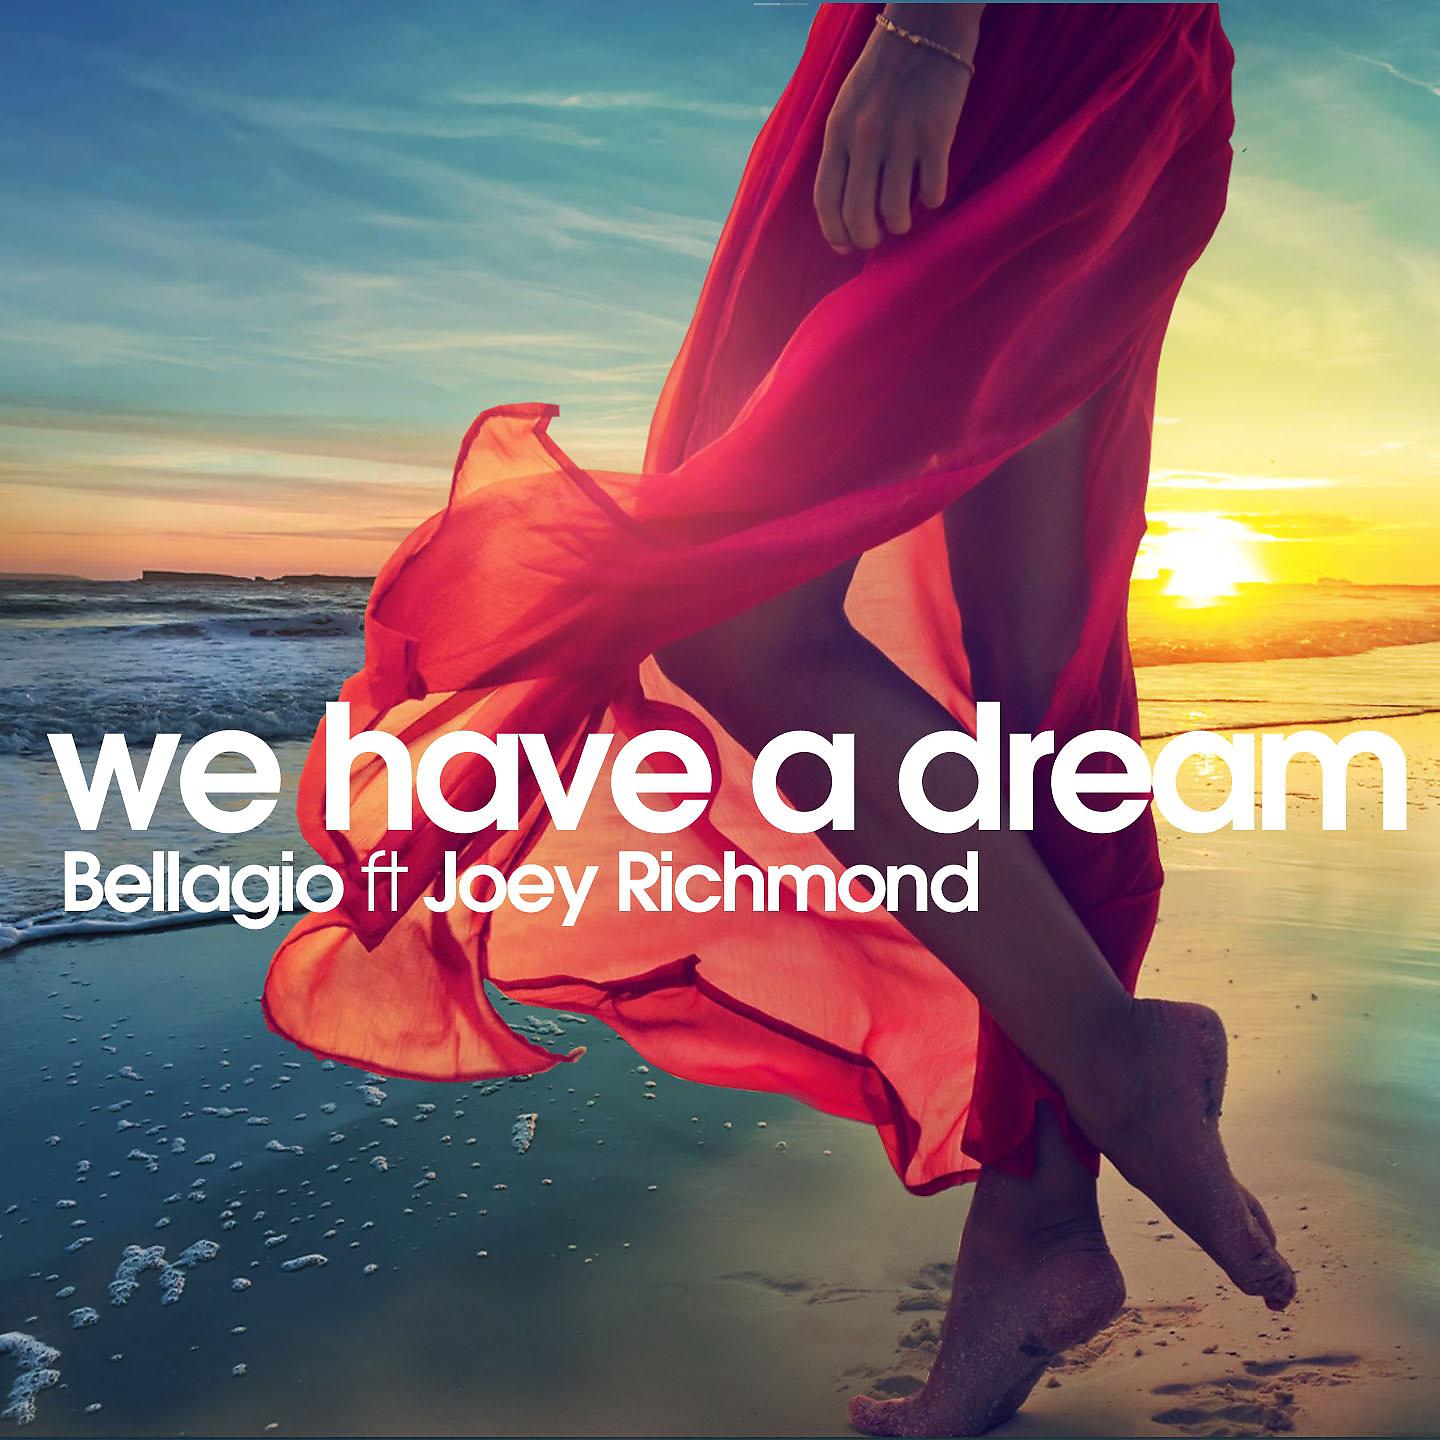 He has a dream. Bellagio we have a Dream. Bellagio ft. Joey Richmond - we have a Dream (Dreamland Edit). Bellagio feat. Joey Richmond. Have a Dream.